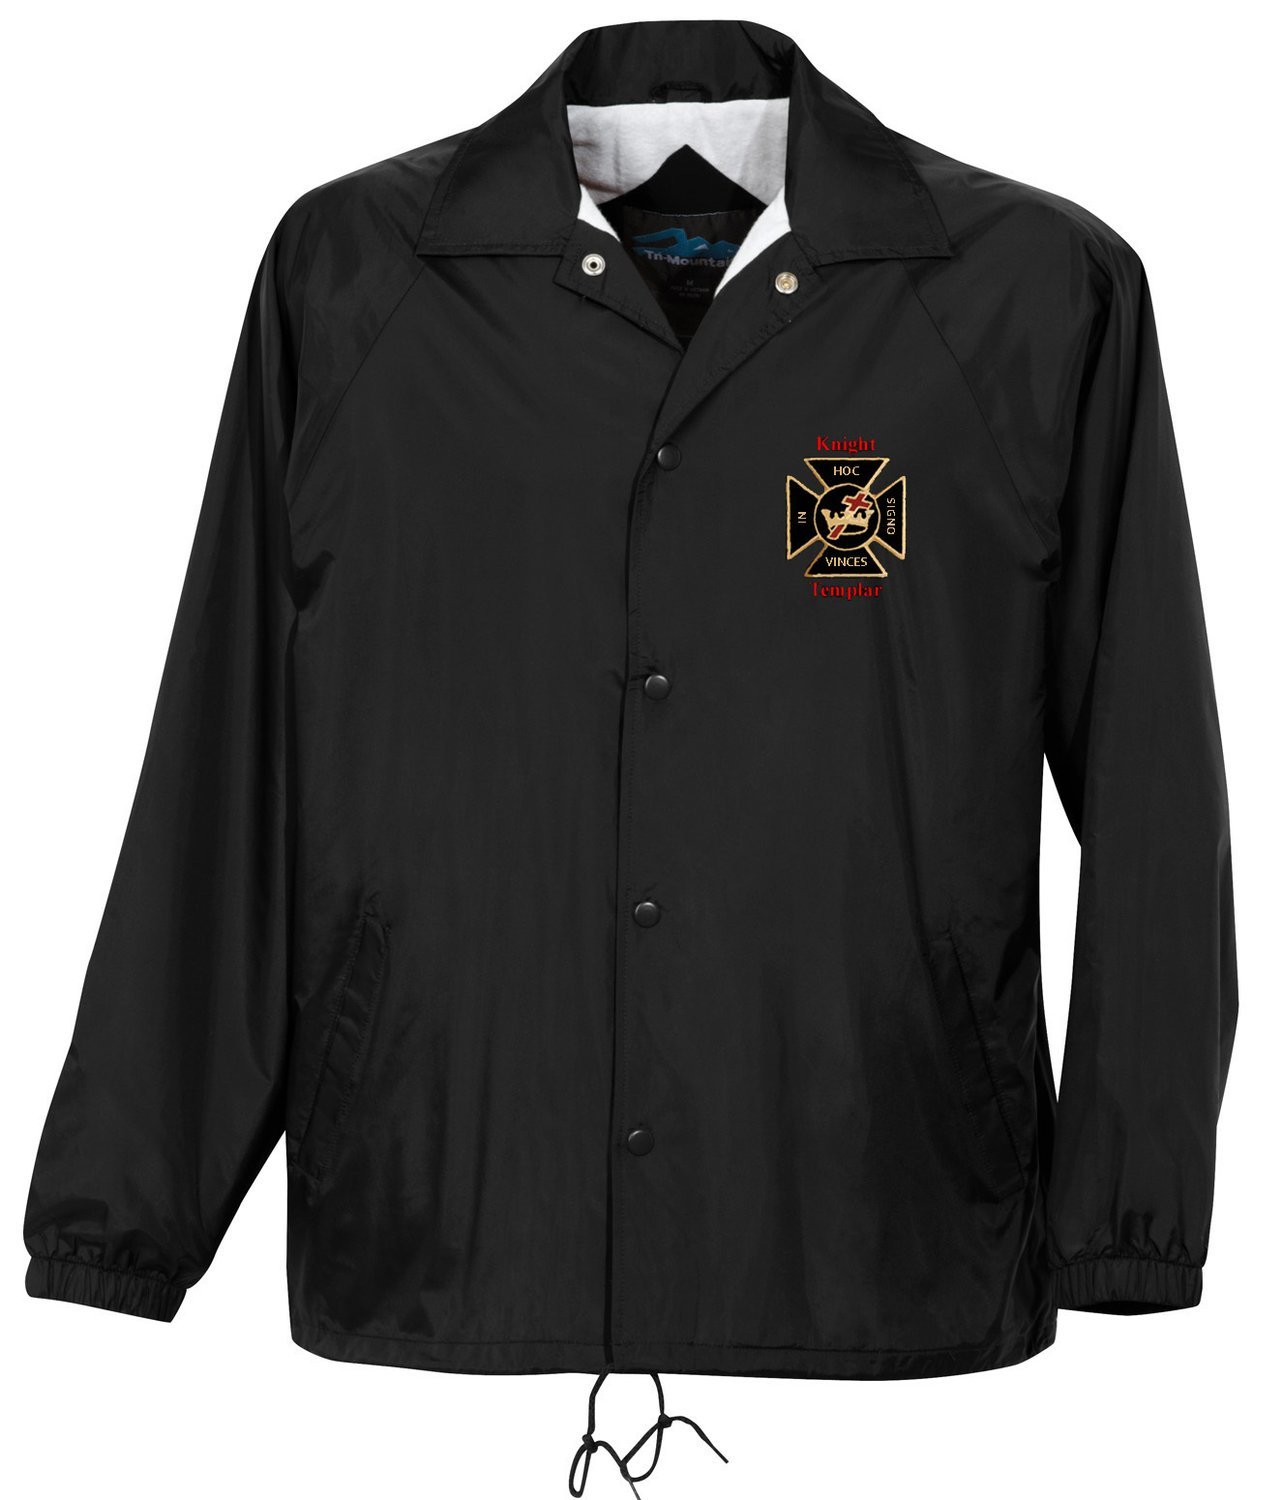 Coaches windbreaker jacket